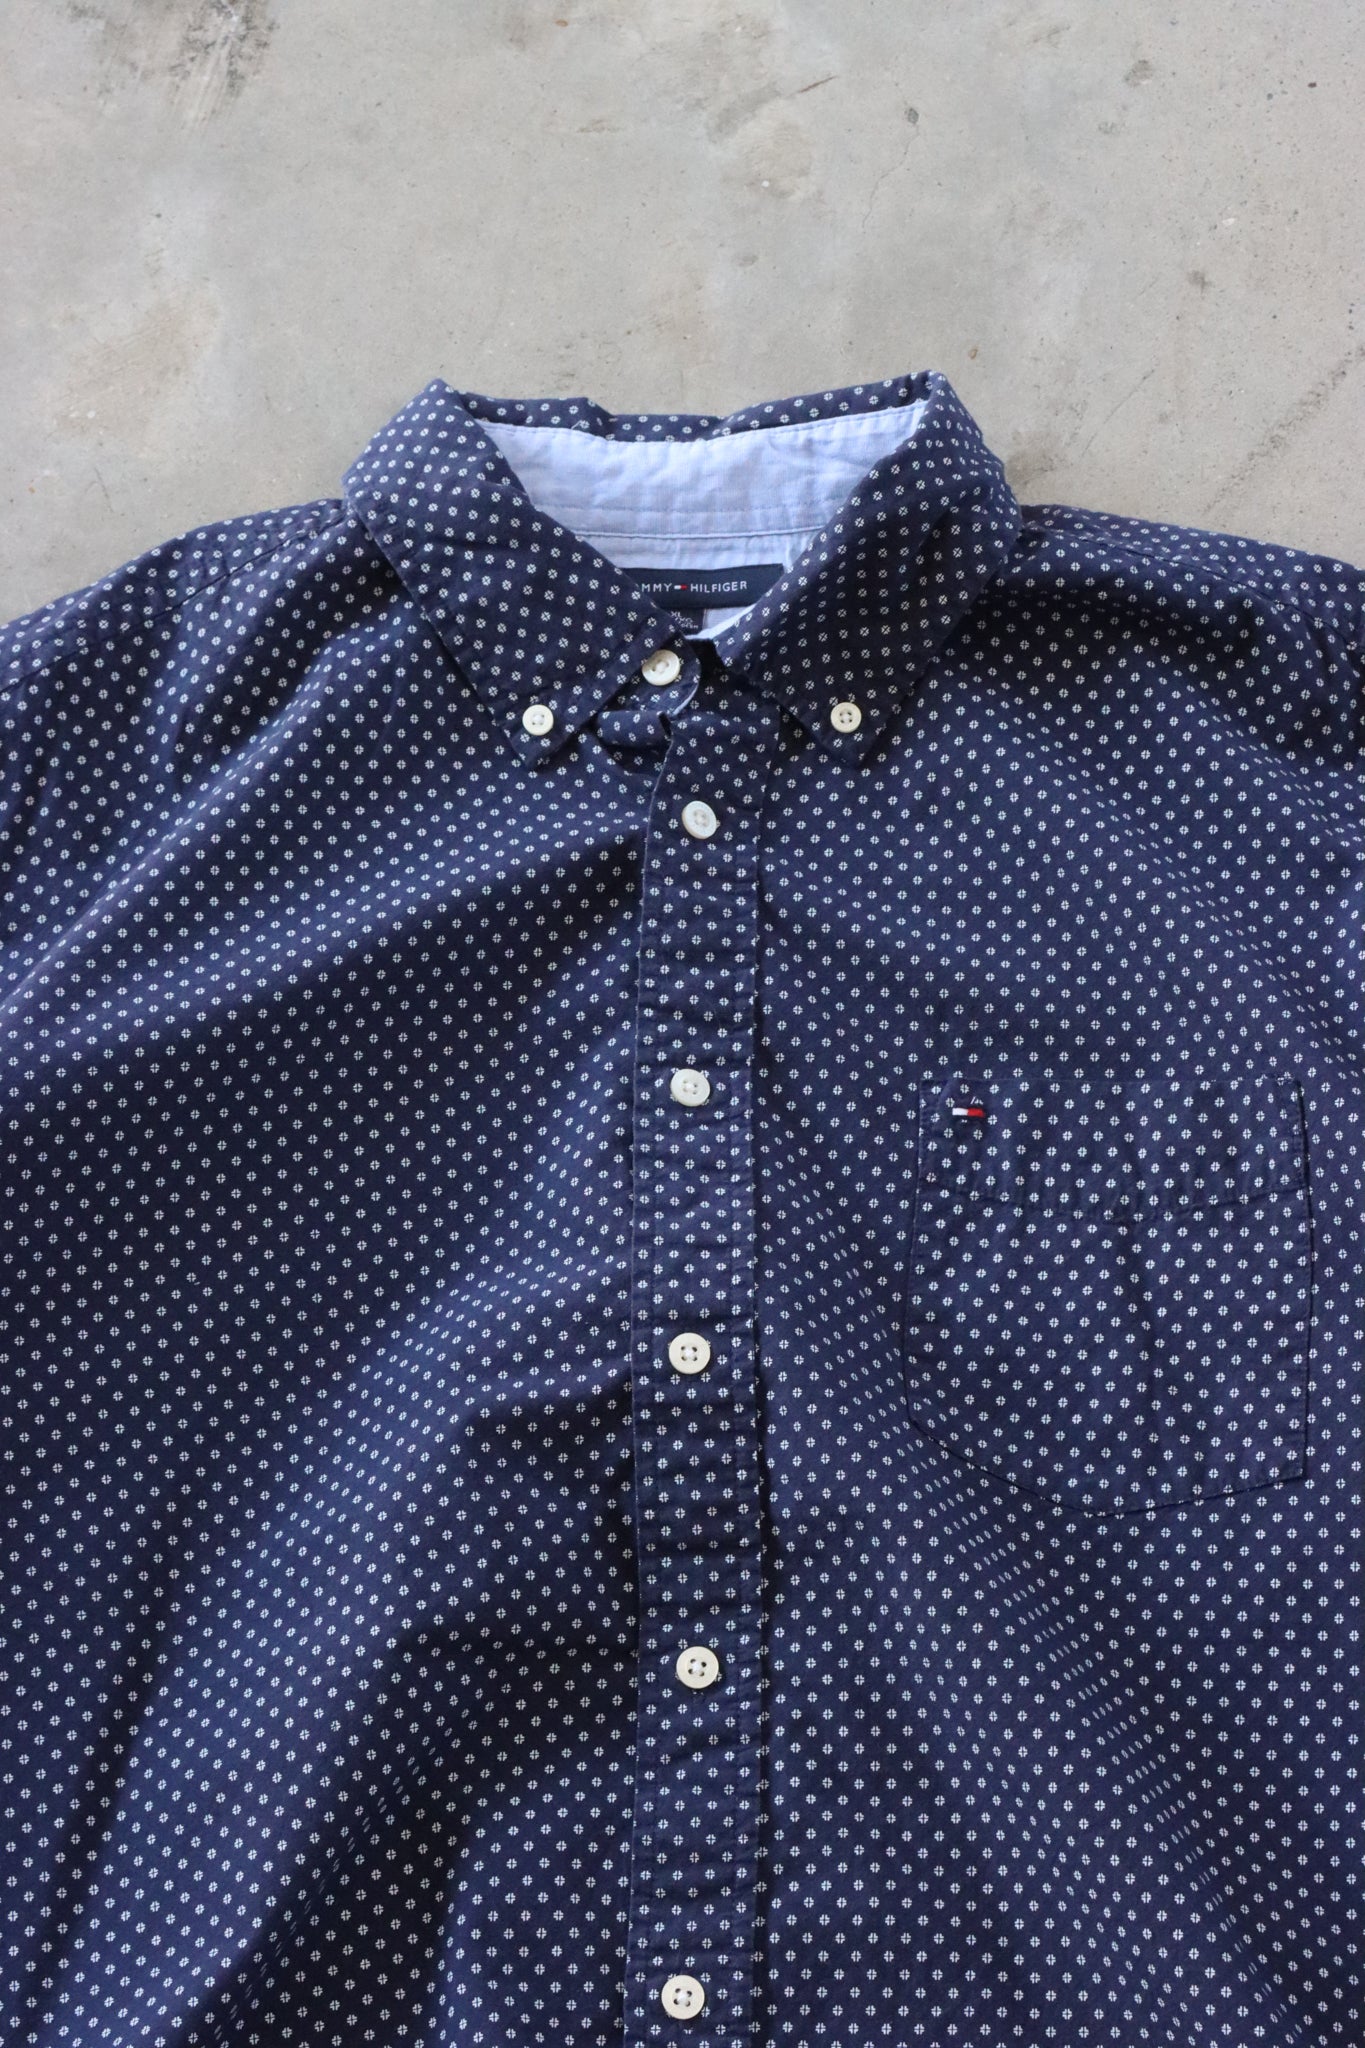 Vintage Tommy Hilfiger Shirt XL